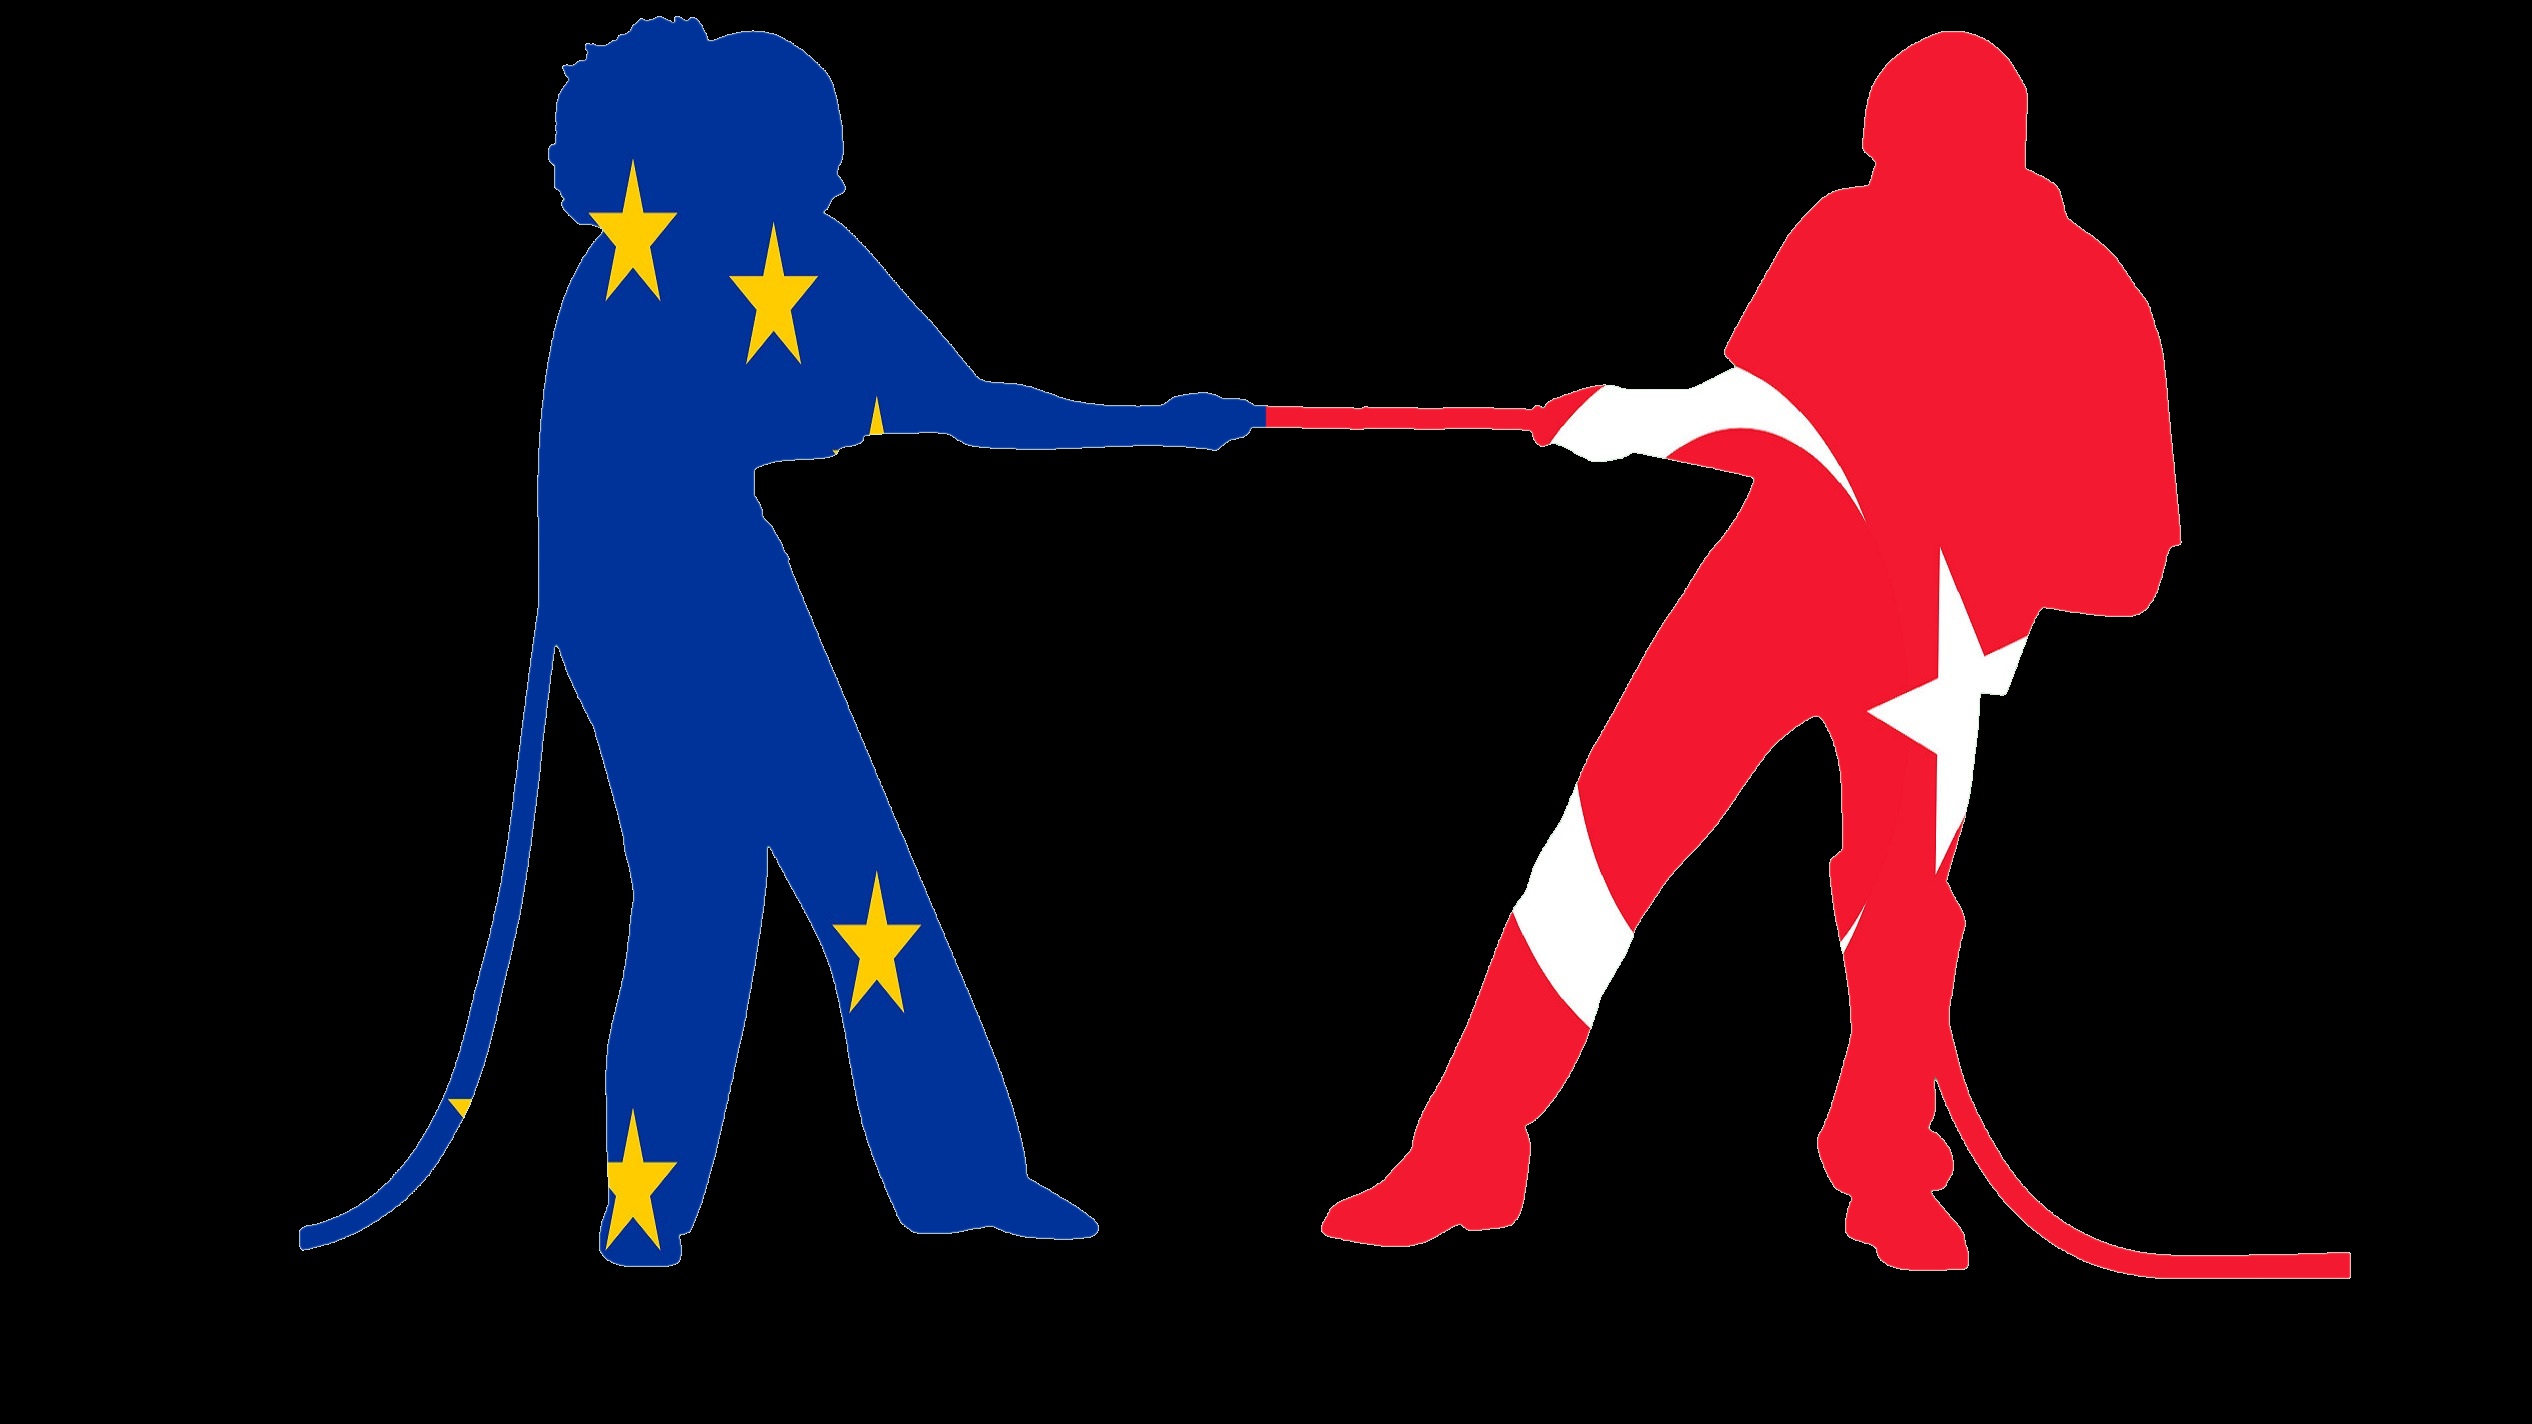 EU-Turkey Relations at Turning Point, EU Warns